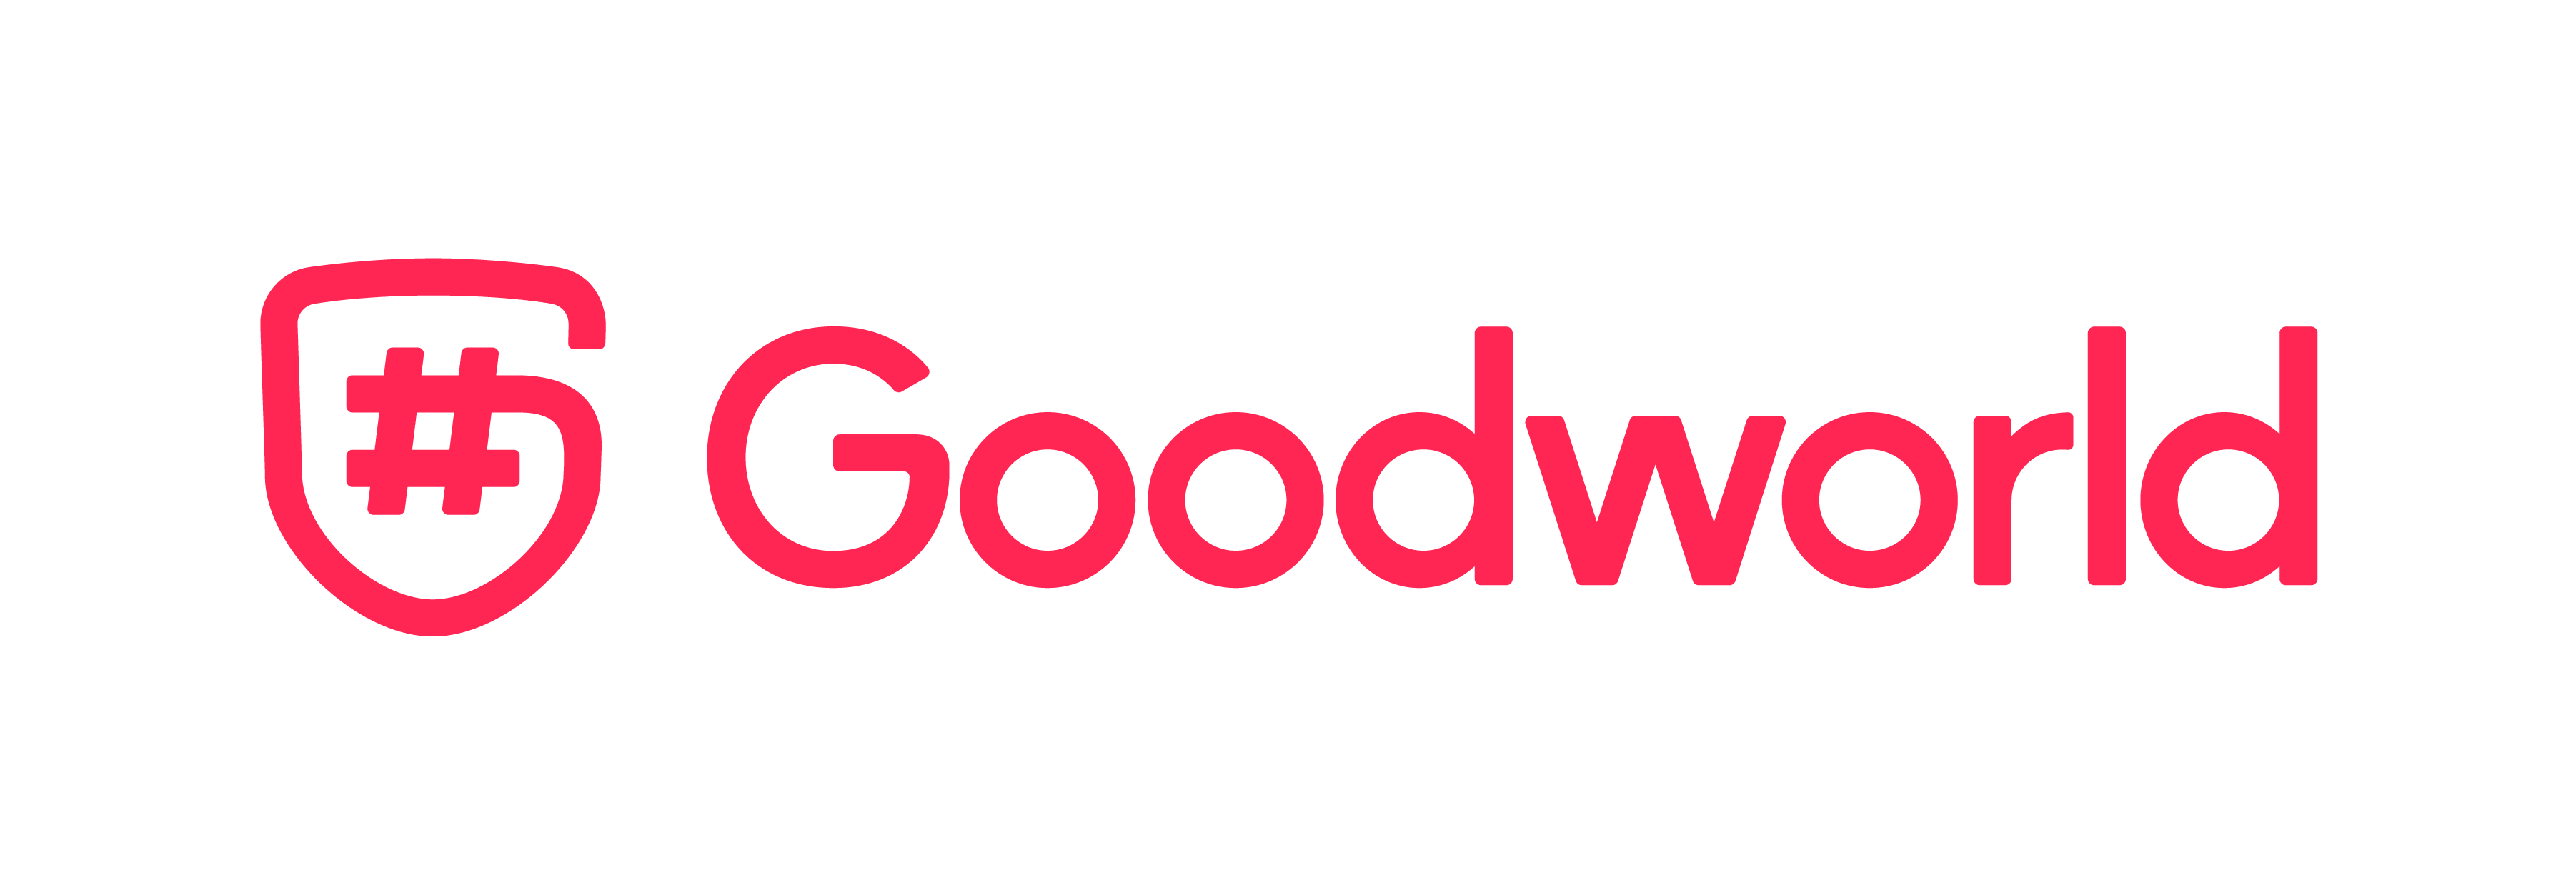 Goodworld Inc., Thursday, November 15, 2018, Press release picture